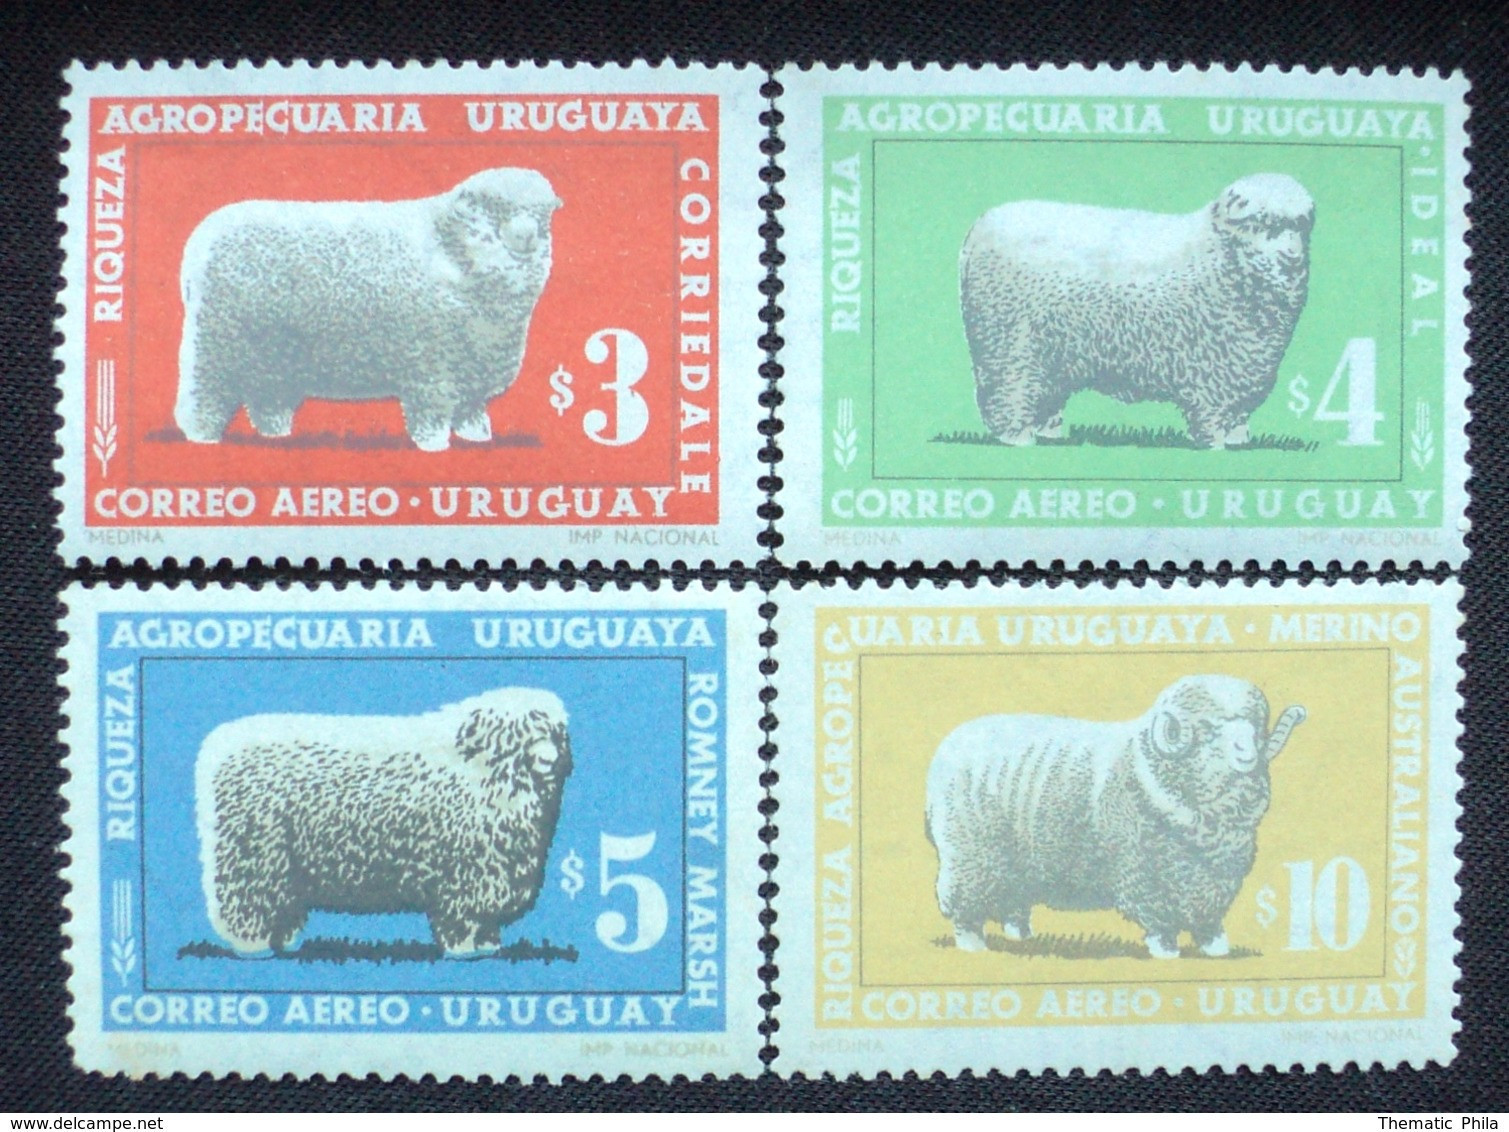 1967 URUGUAY MNH AIR MAIL Yvert A308/311 - Cattle Ovine Ovino Sheep Mouton Oveja Corriedale Ideal Marsh Merino Schaf - Uruguay